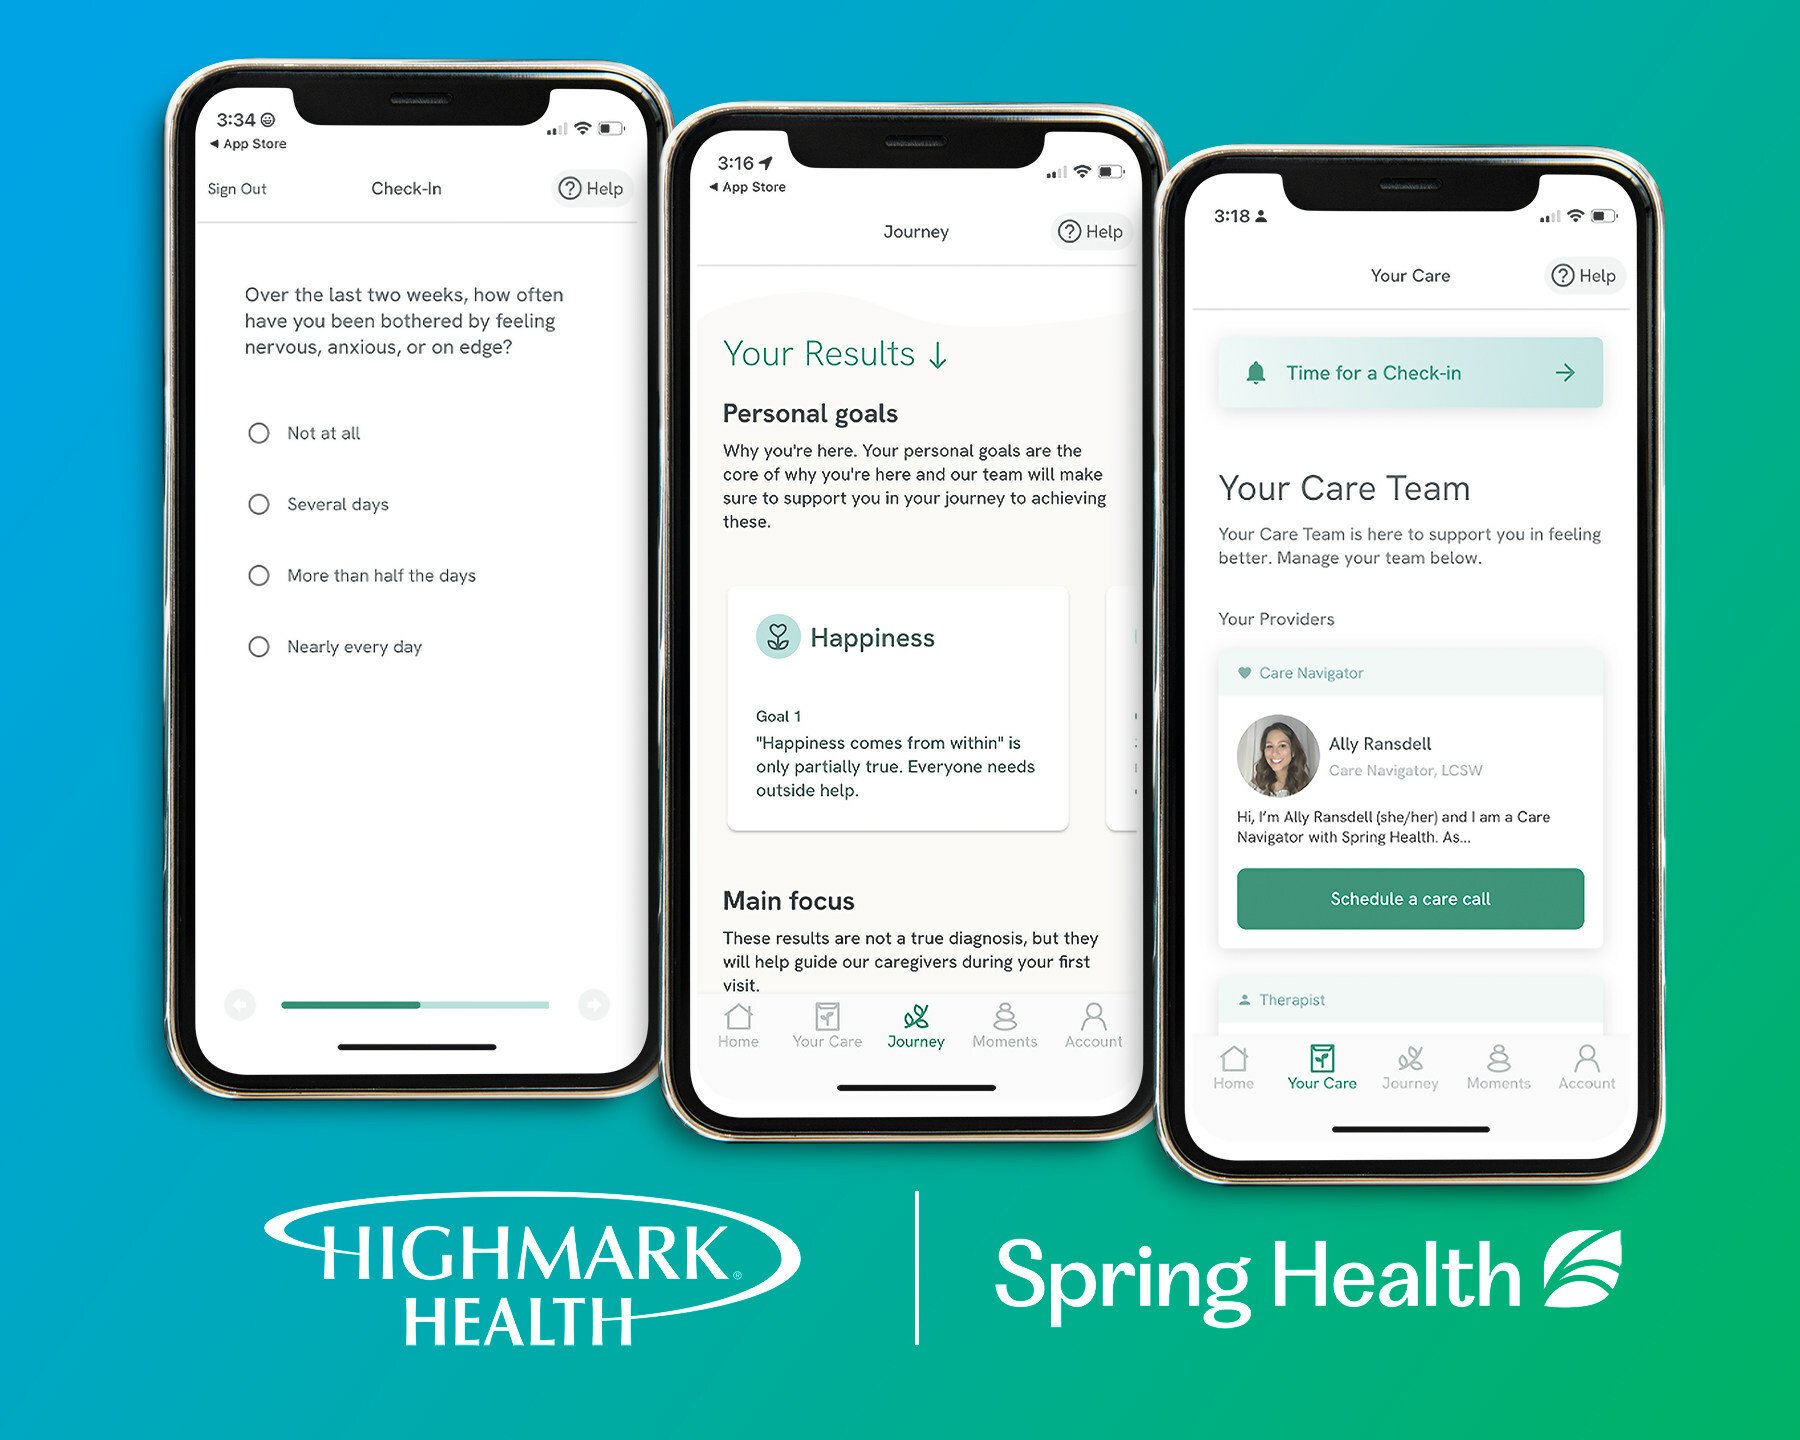 Screenshots displaying Highmarks new behavioral health tool